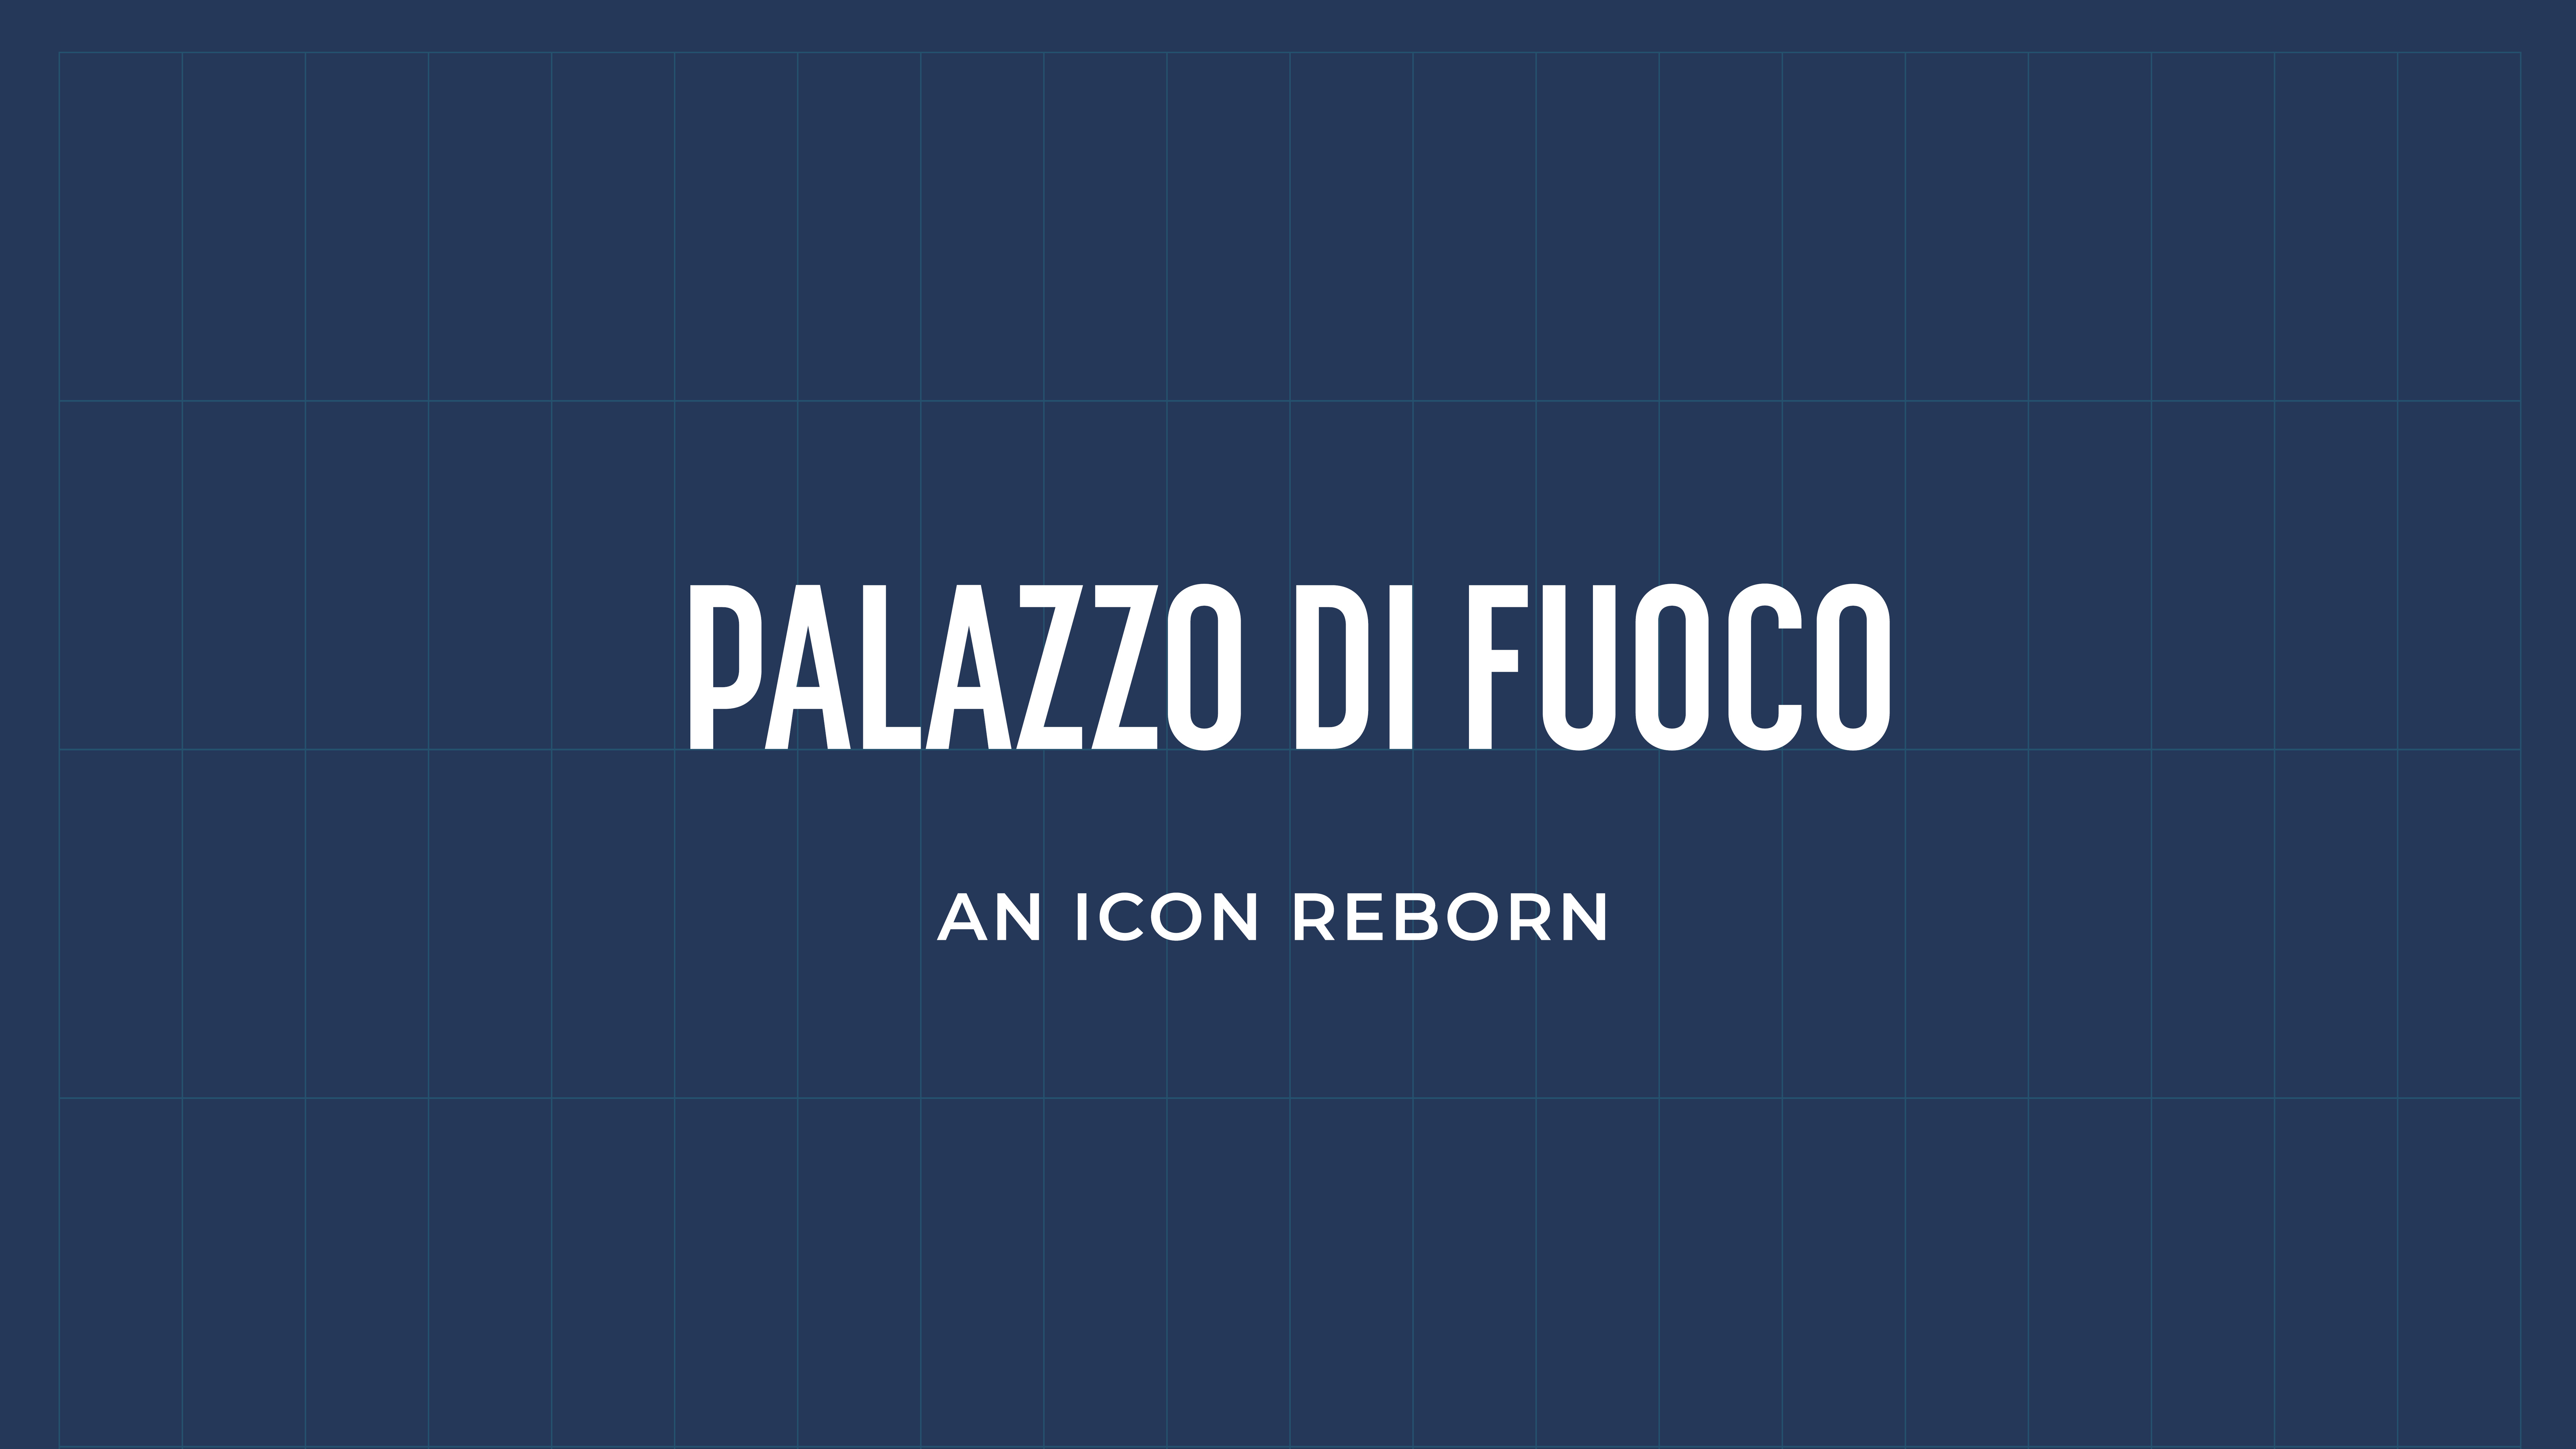 palazzodifuoco-header-background